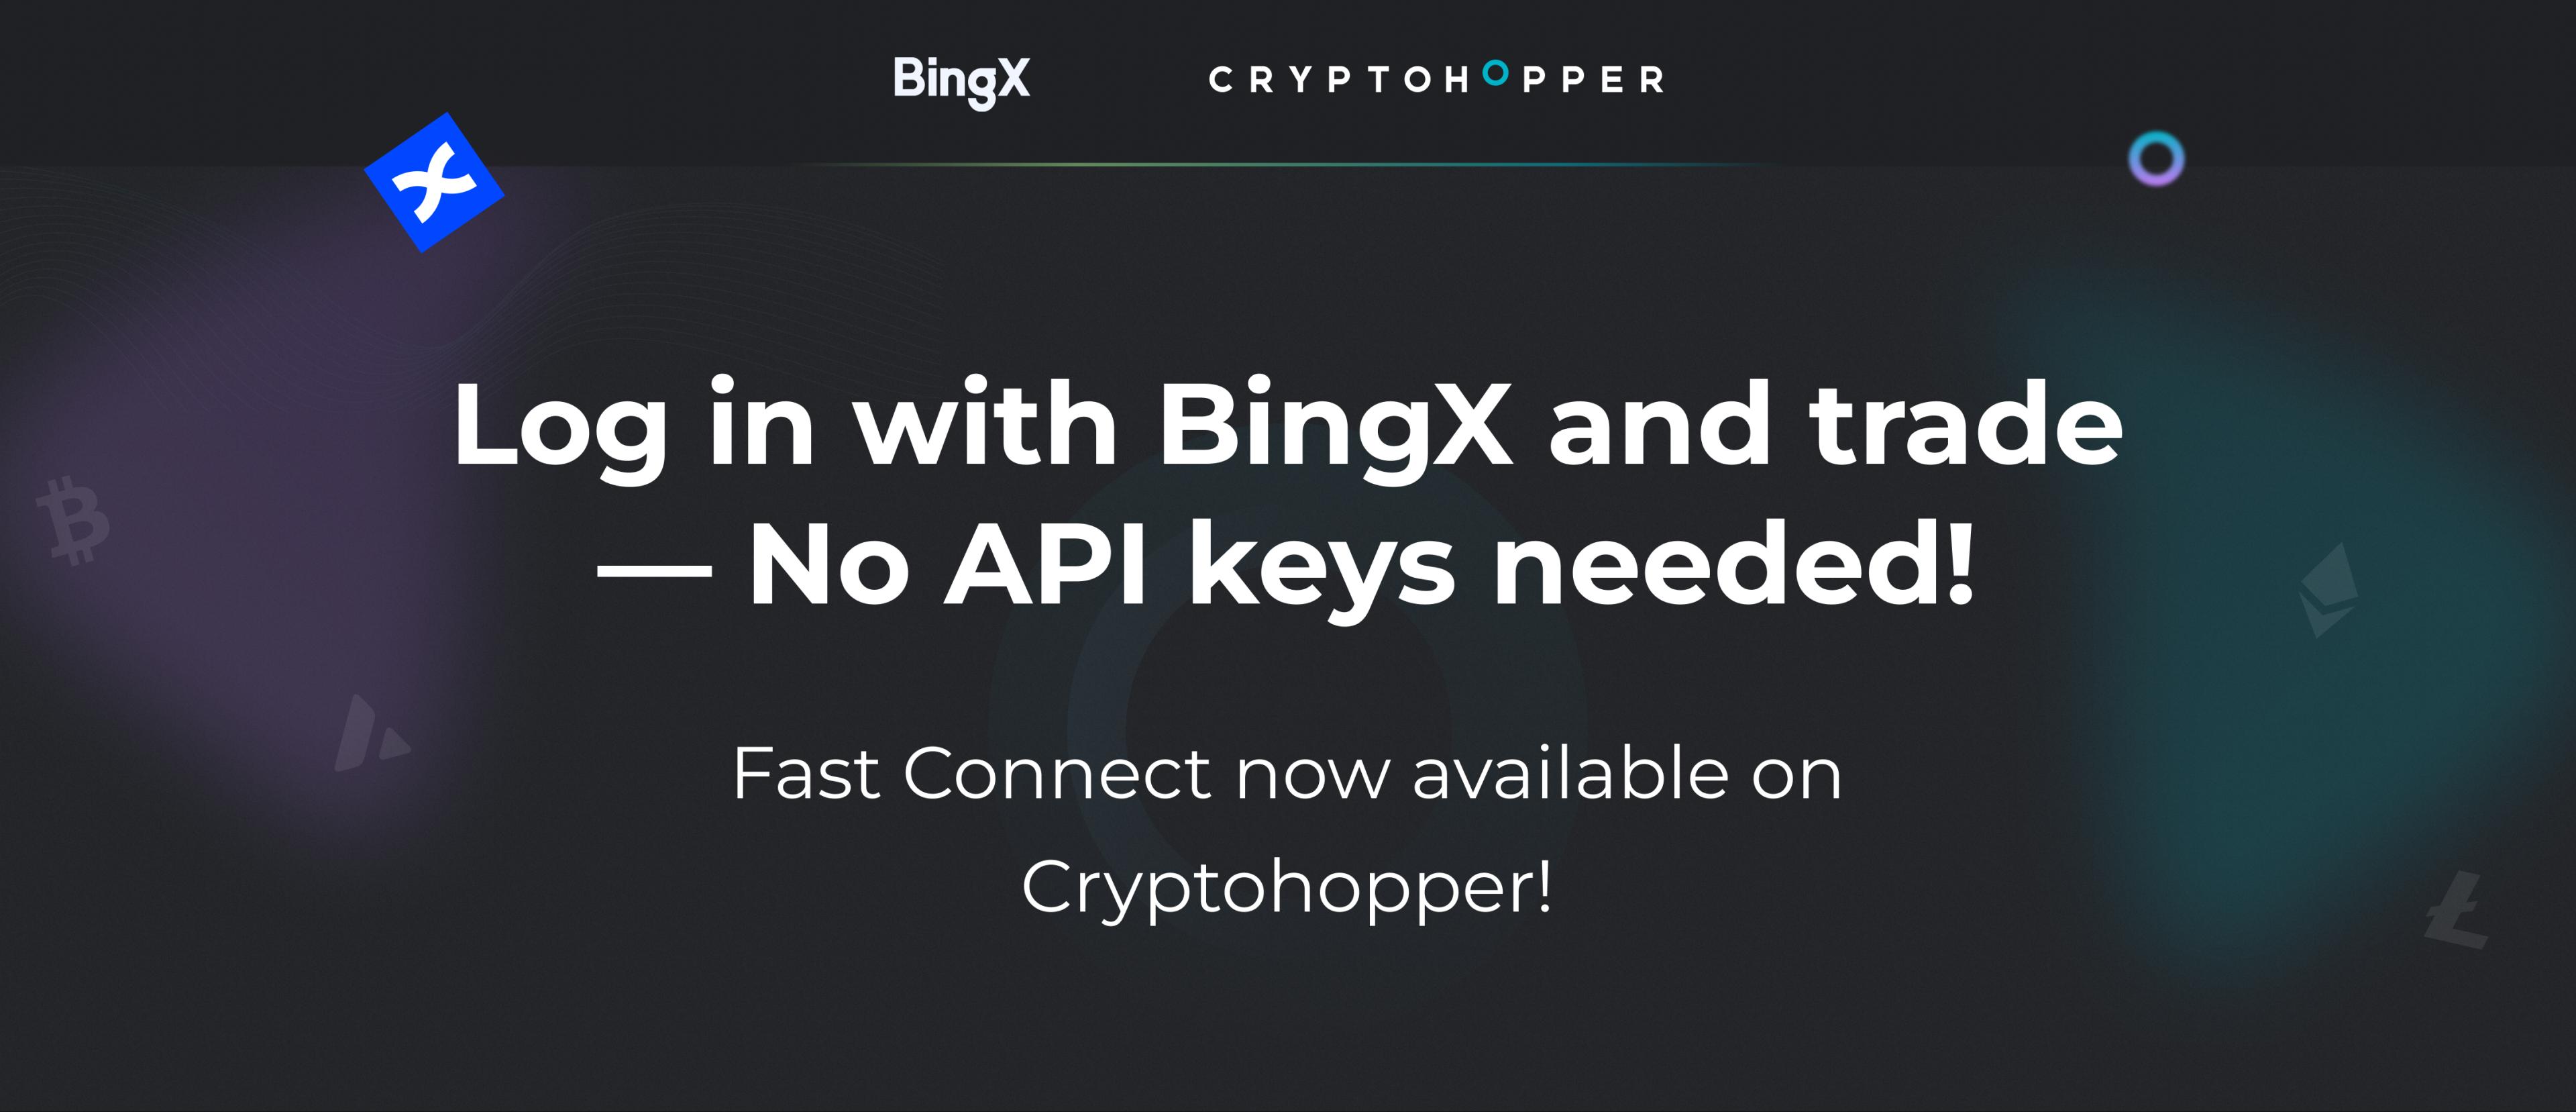 Cryptohopper Announces Implementation of BingX’s oAuth2 Solution